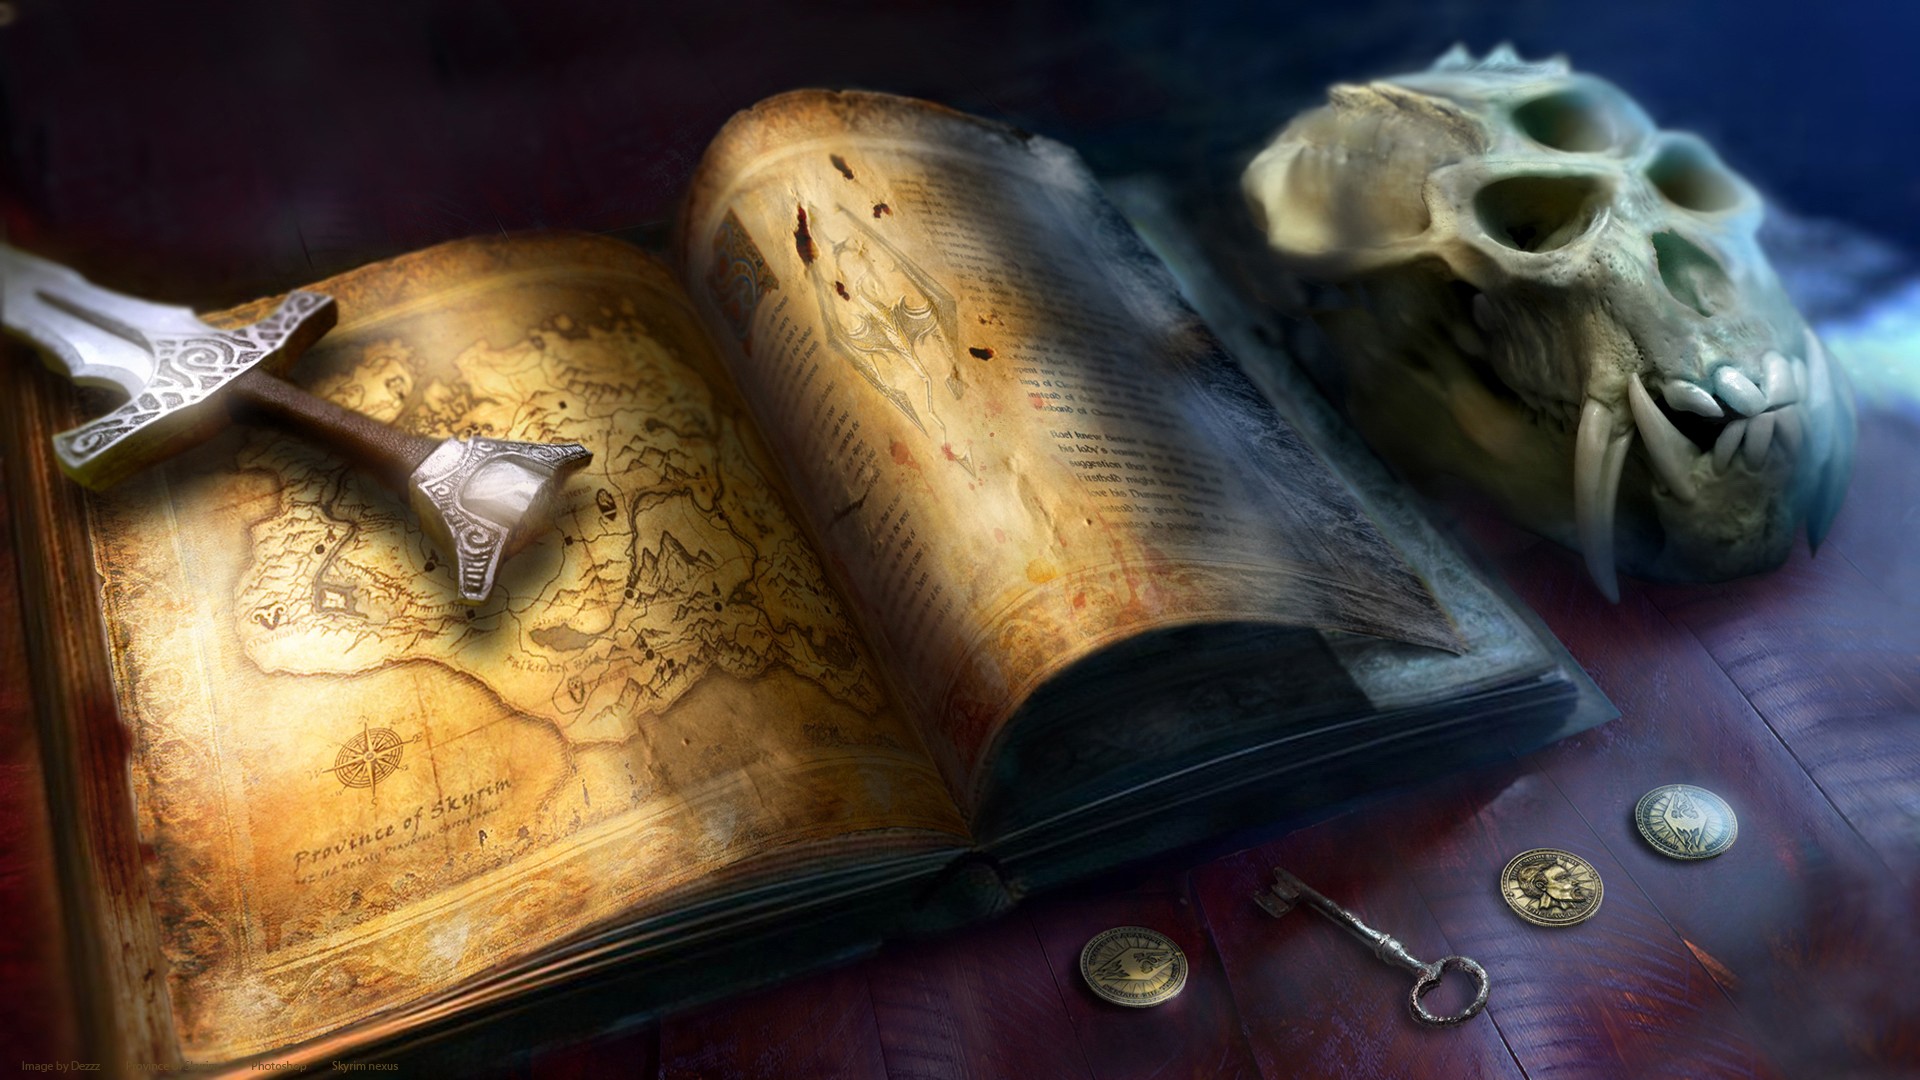 General 1920x1080 The Elder Scrolls V: Skyrim video games map fantasy art skull RPG video game art coins keys PC gaming